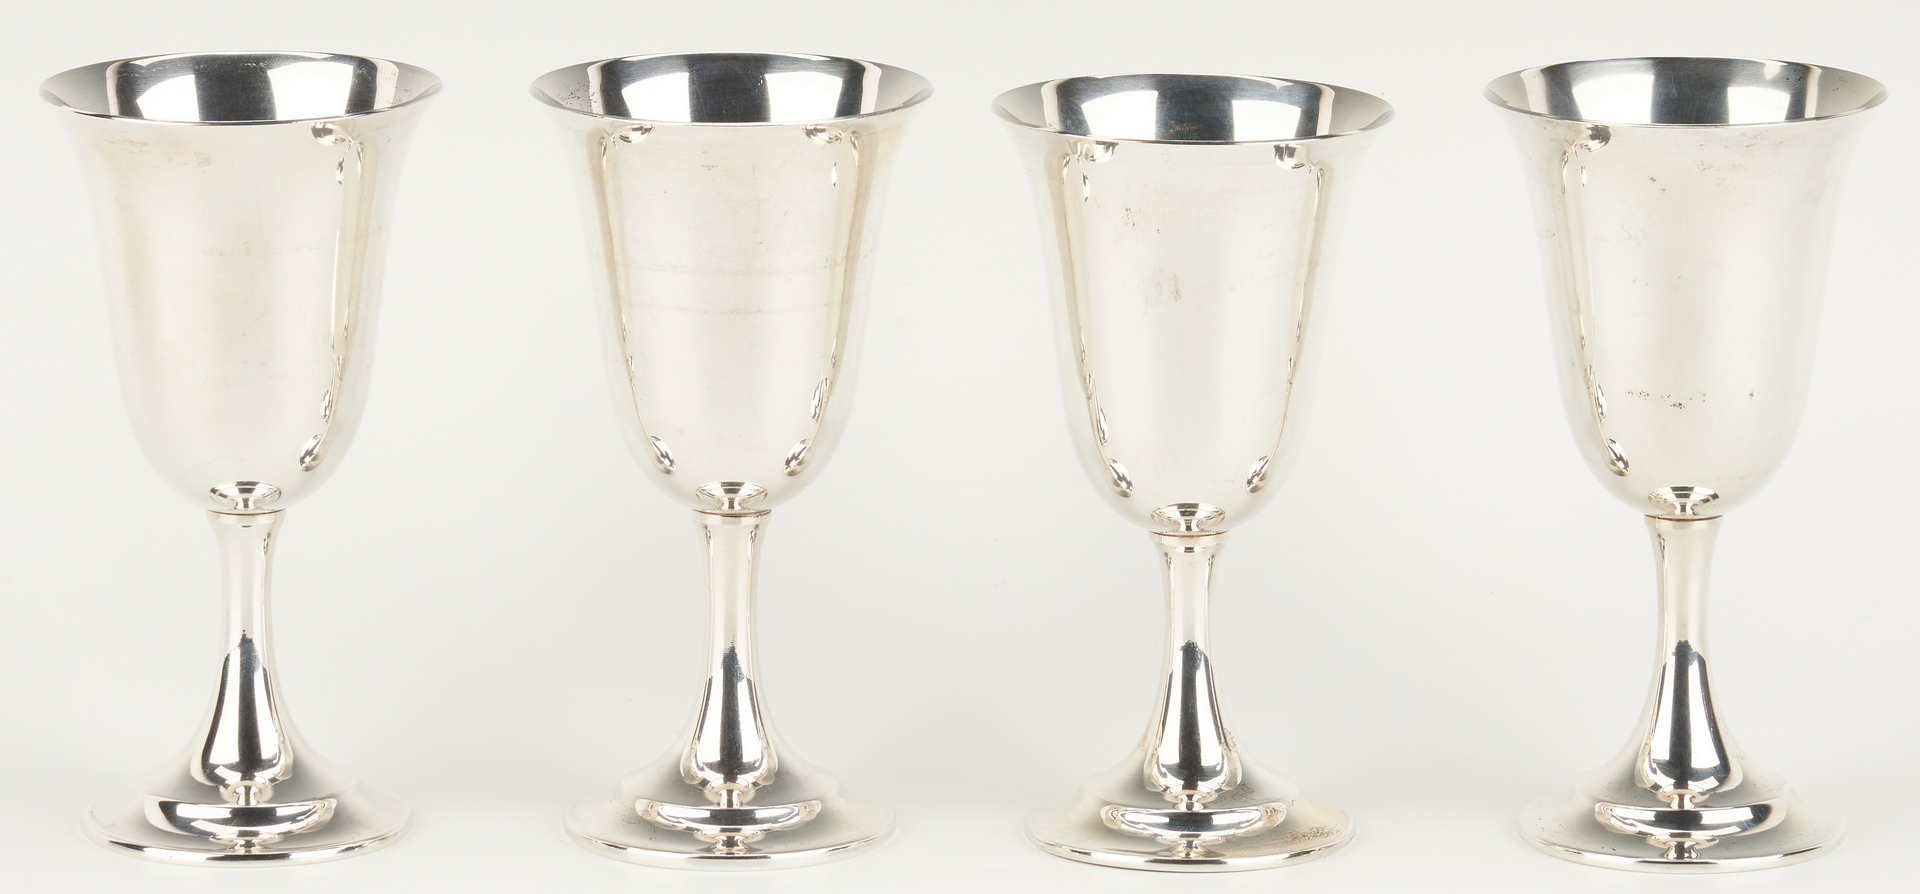 Lot 804:  8 International Lord Saybrook Sterling Silver Goblets